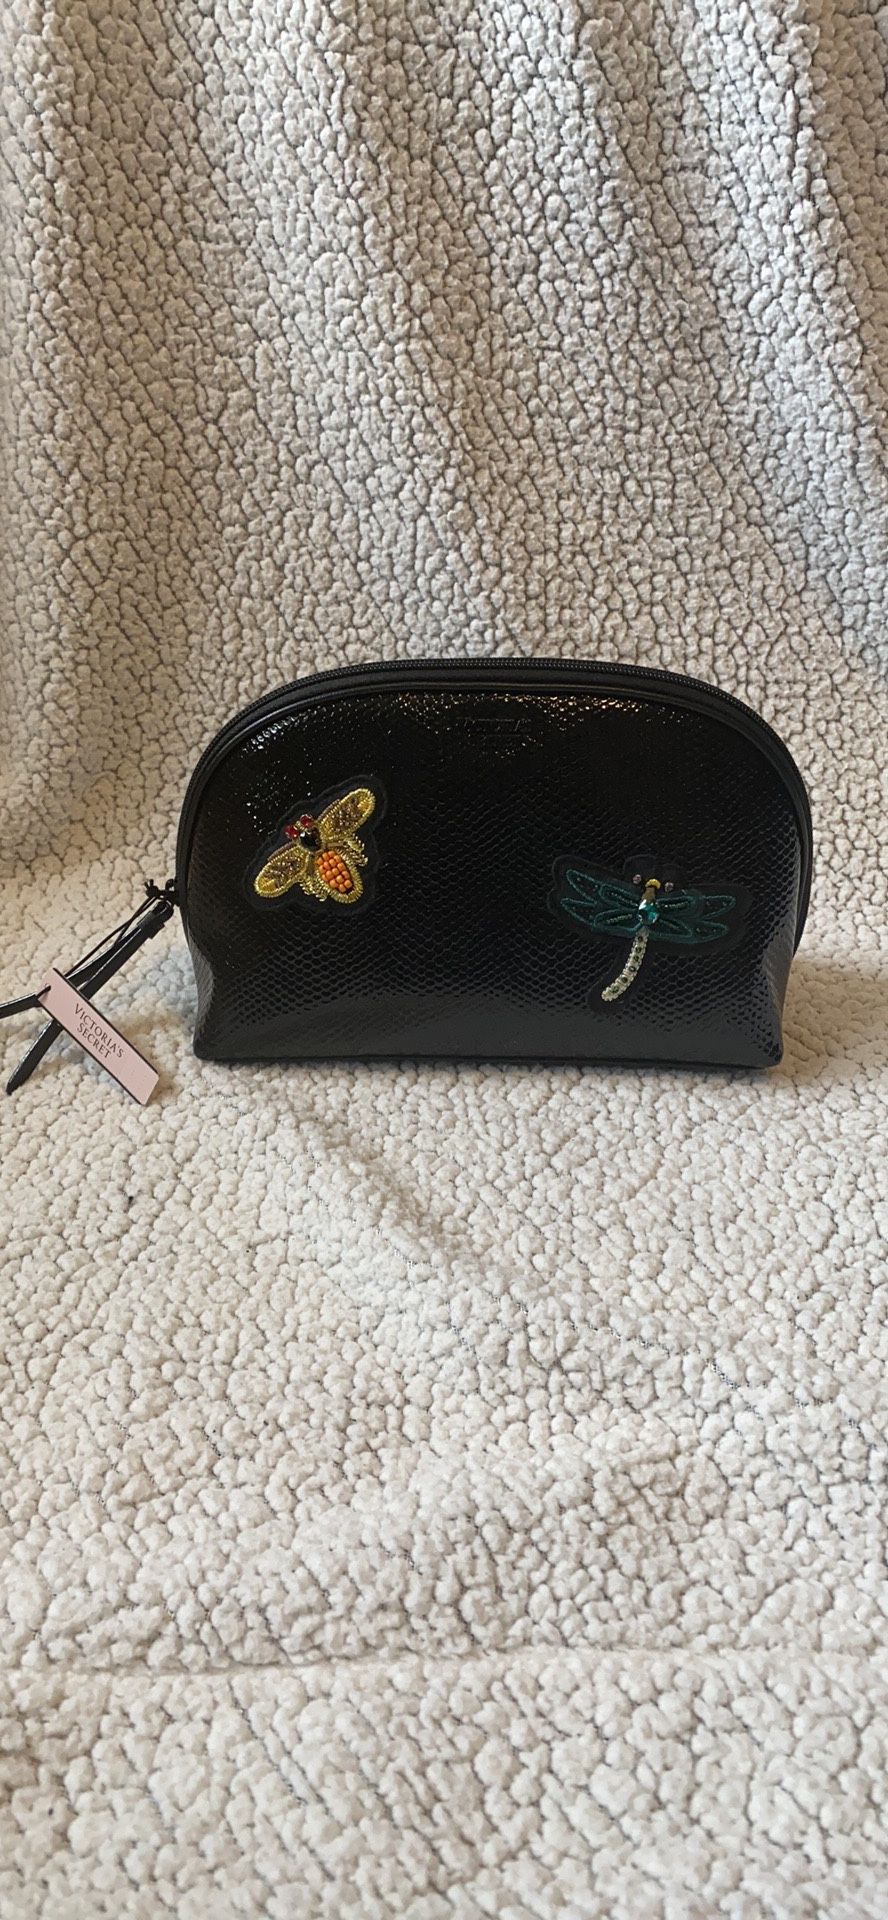 Victoria’s Secret Black Bee & Dragonfly Cosmetic Bag